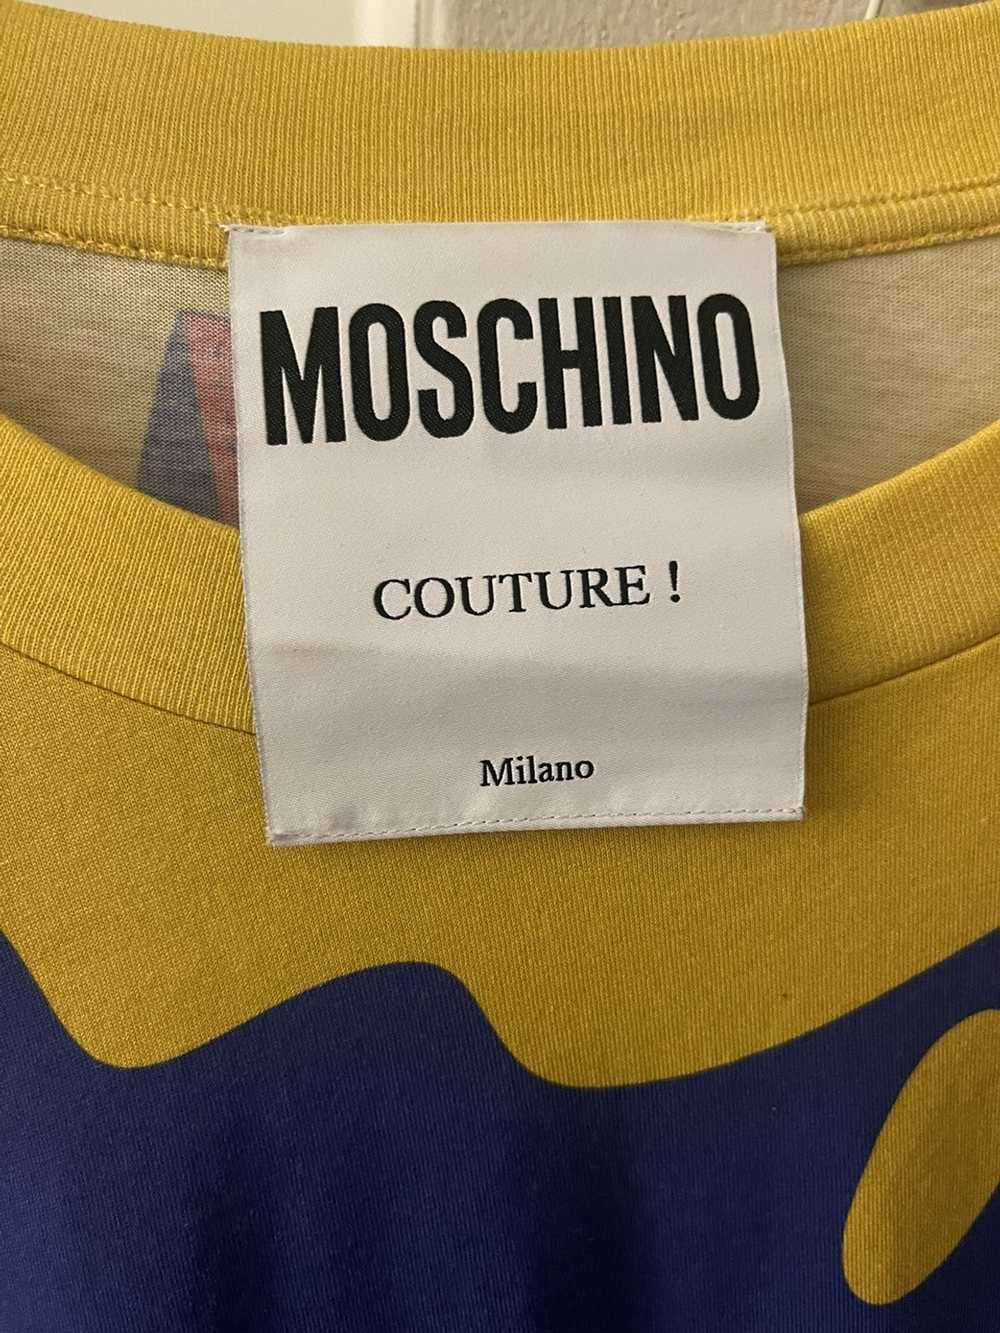 Moschino Moschino Milano (Runway Piece) - image 4